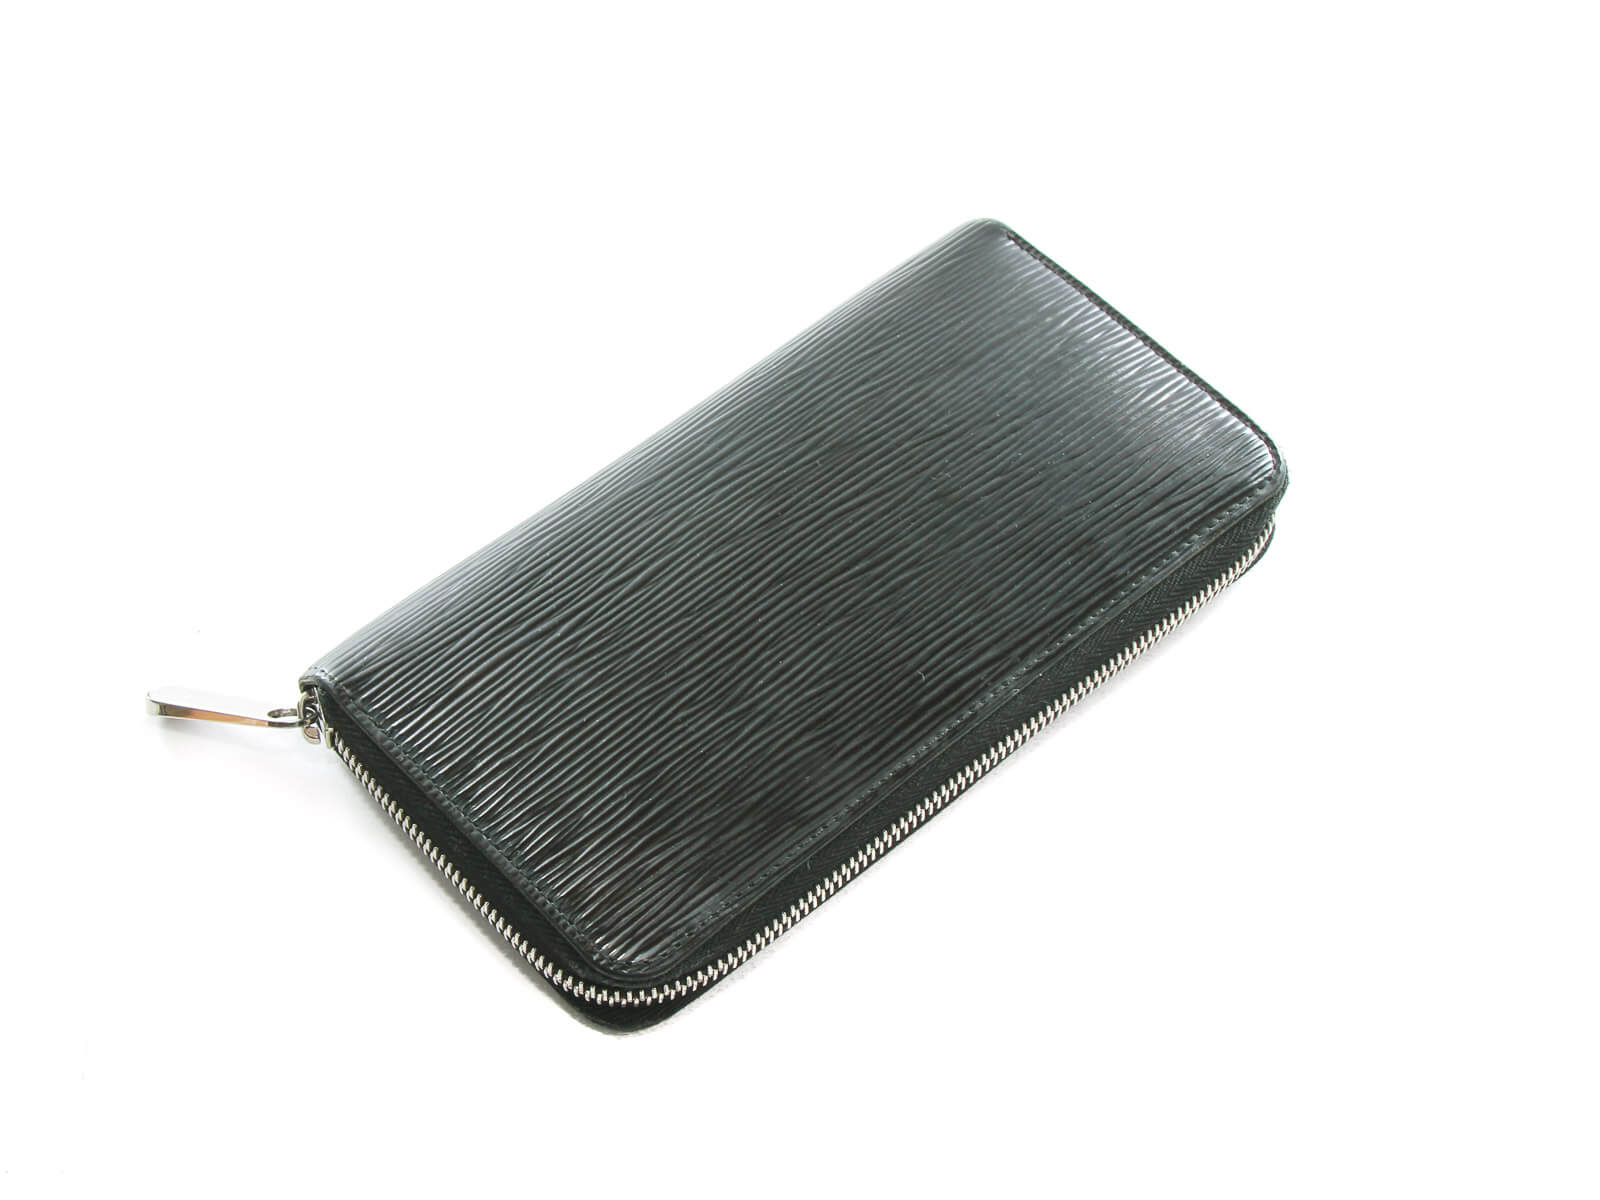 Zippy Wallet - Luxury Epi Leather Black